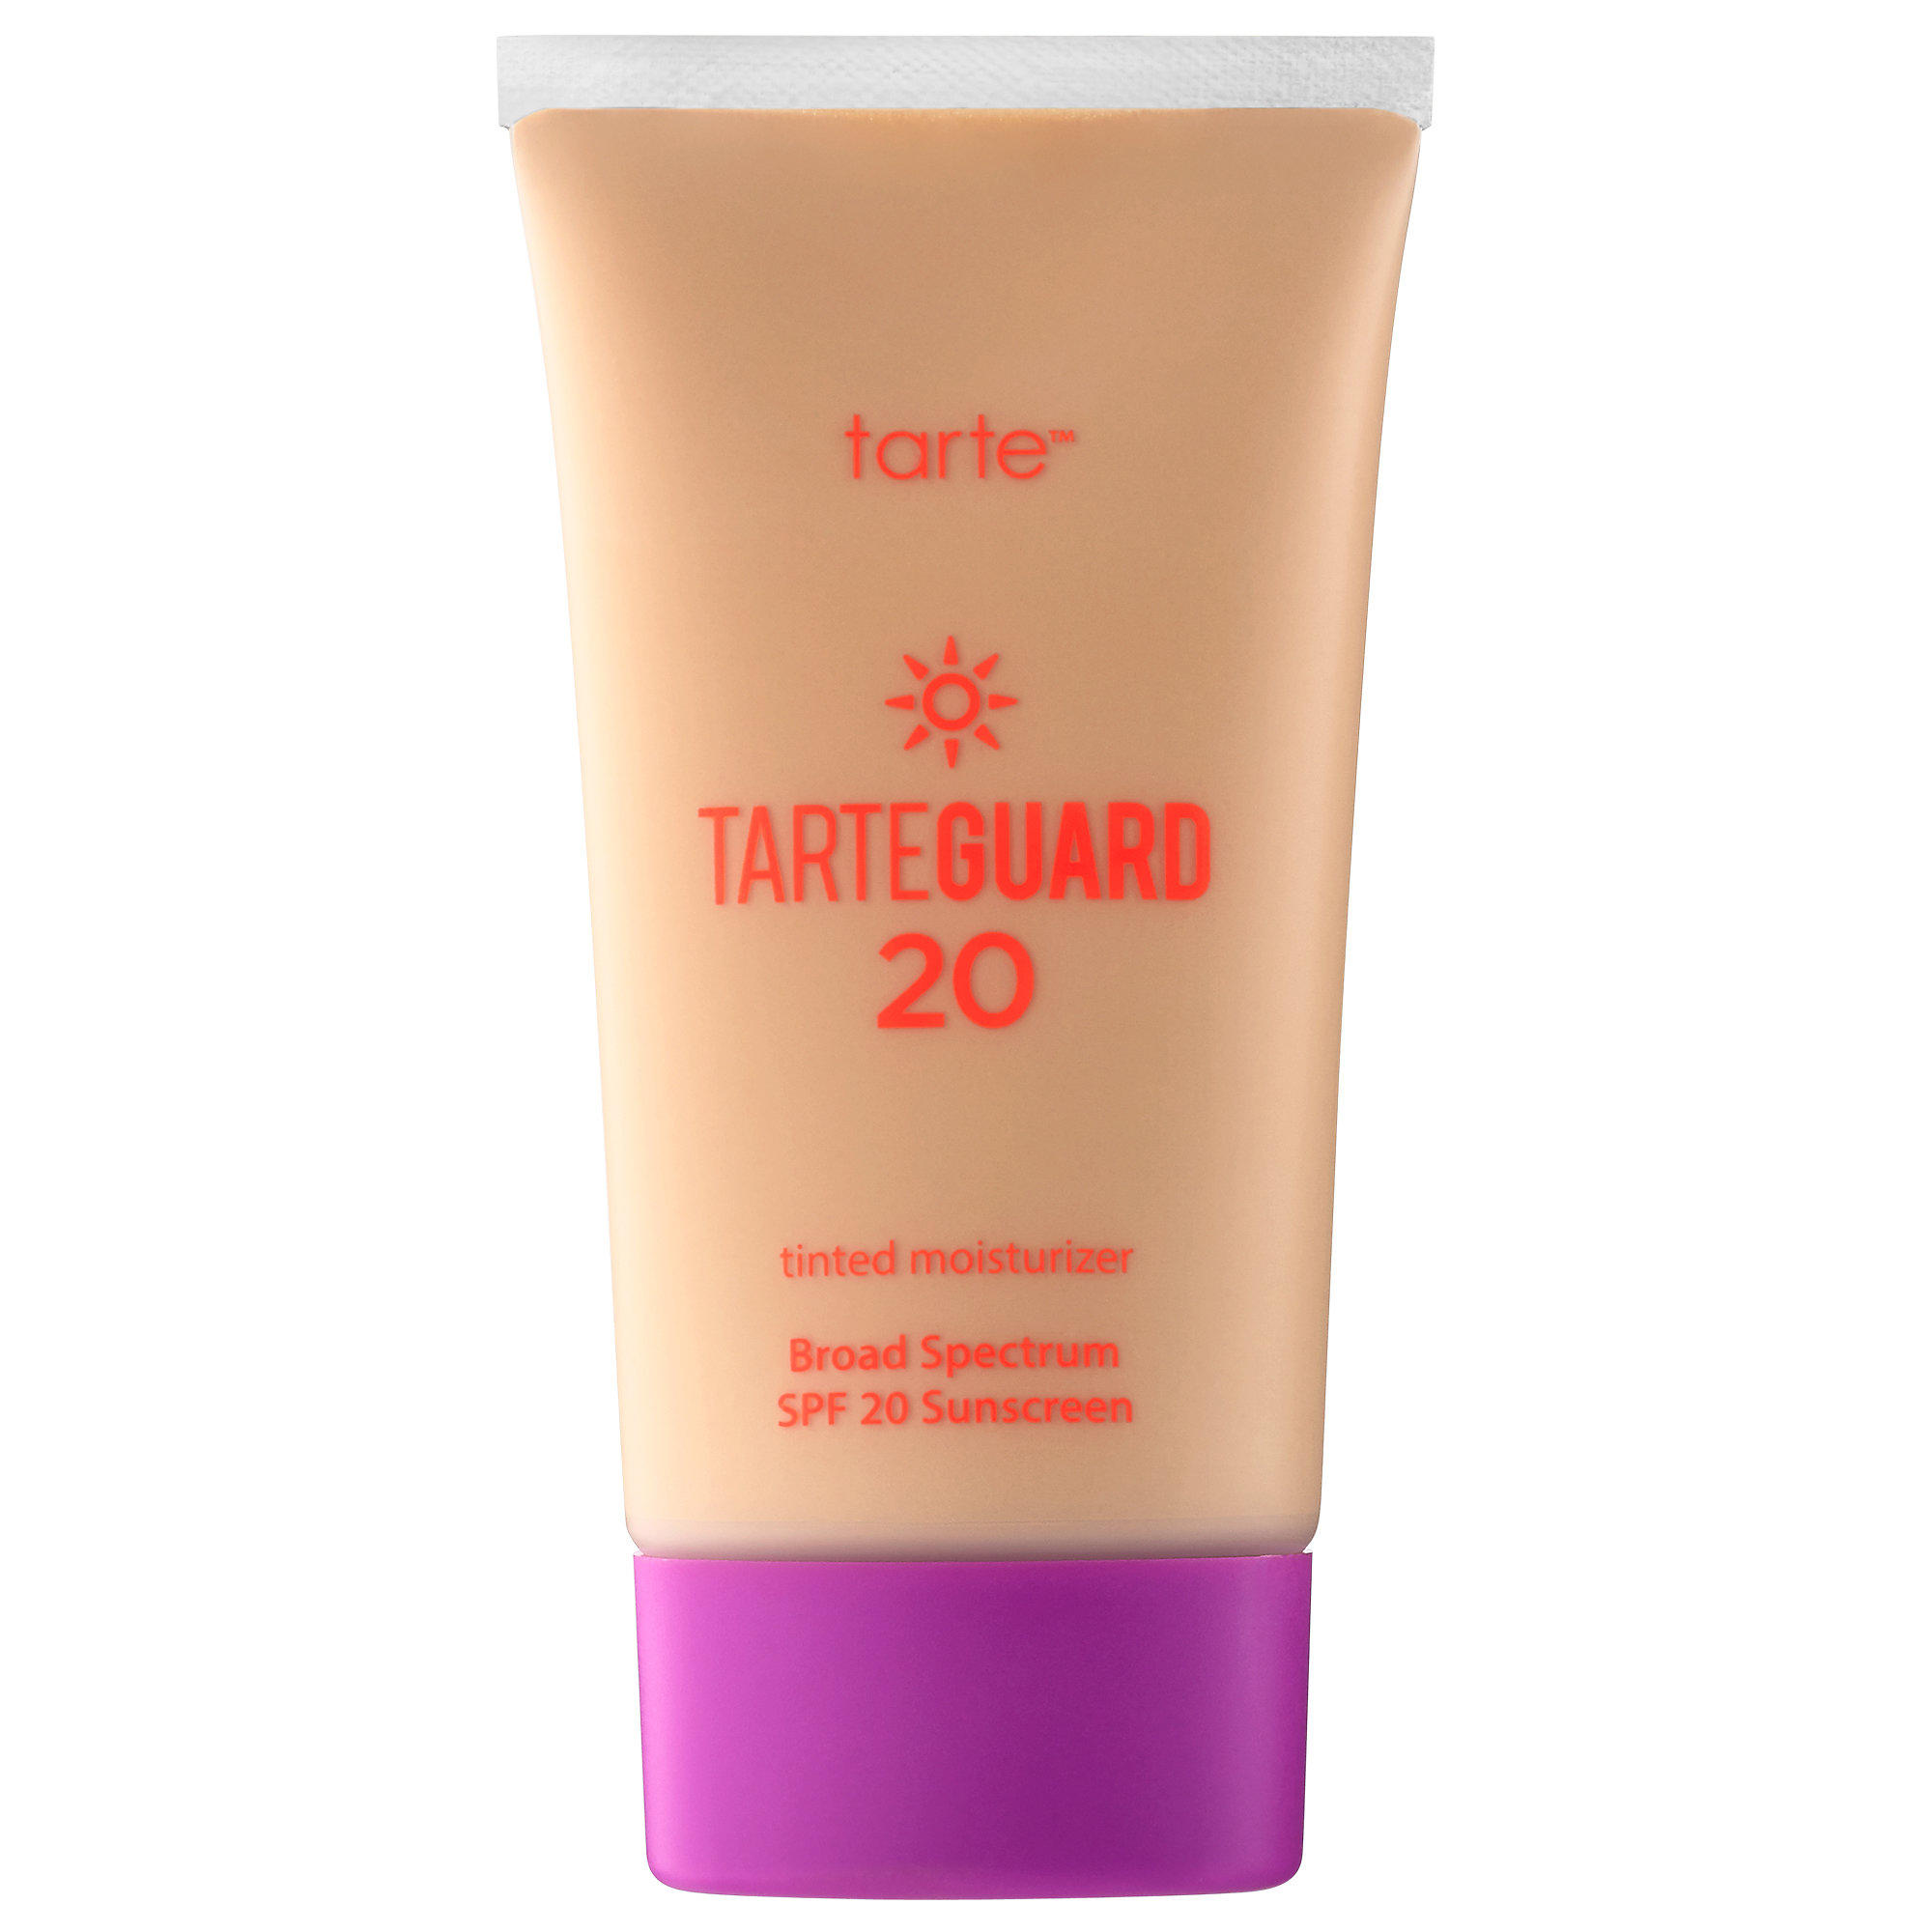 Tarte Tarteguard 20 Tinted Moisturizer SPF 20 Sunscreen Light